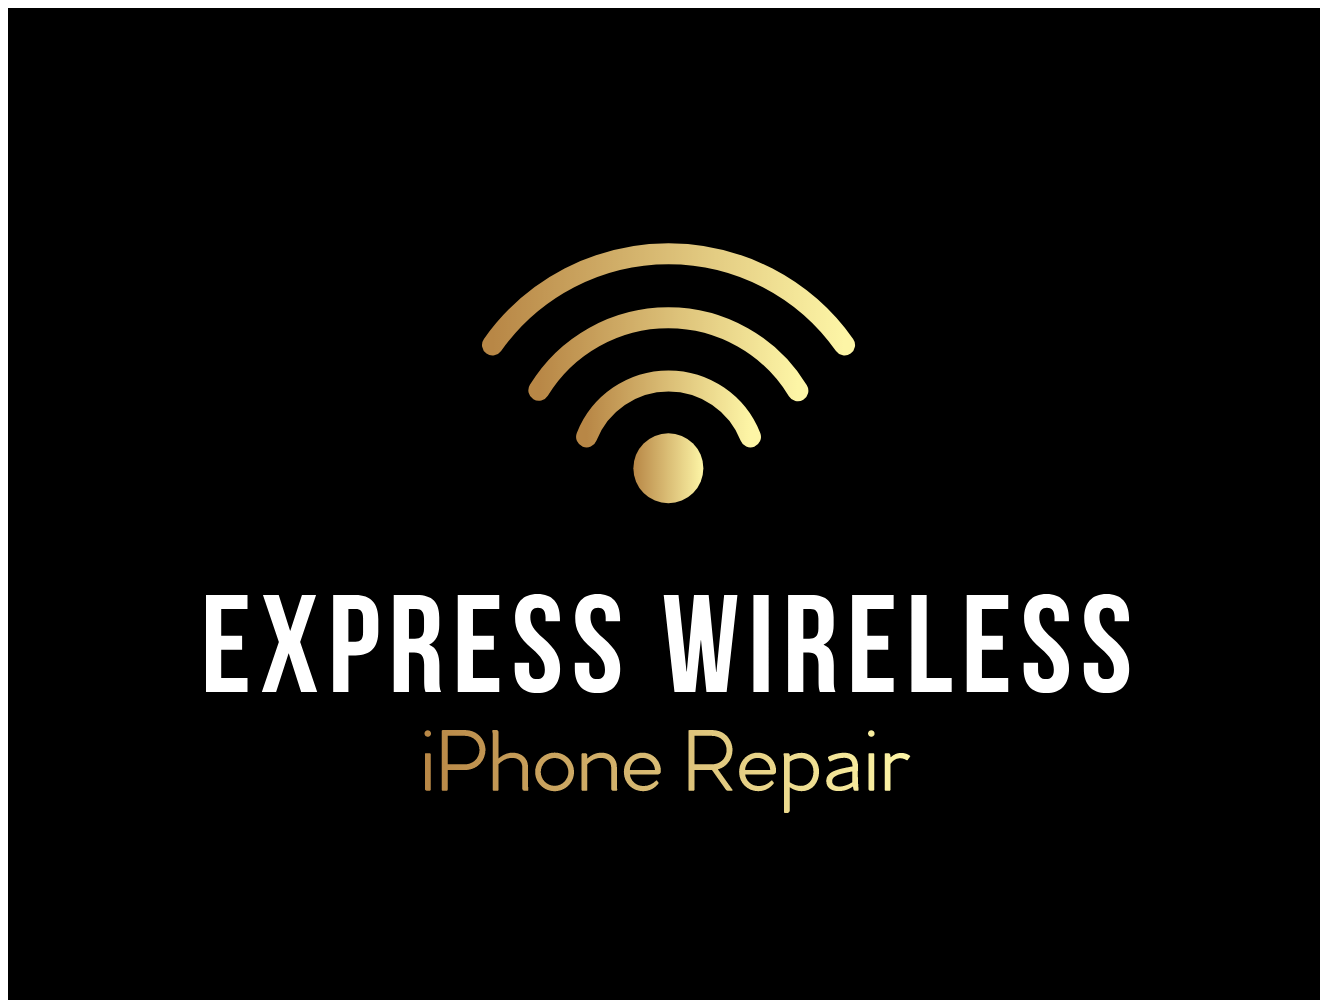 Express Wireless iPhone Repair